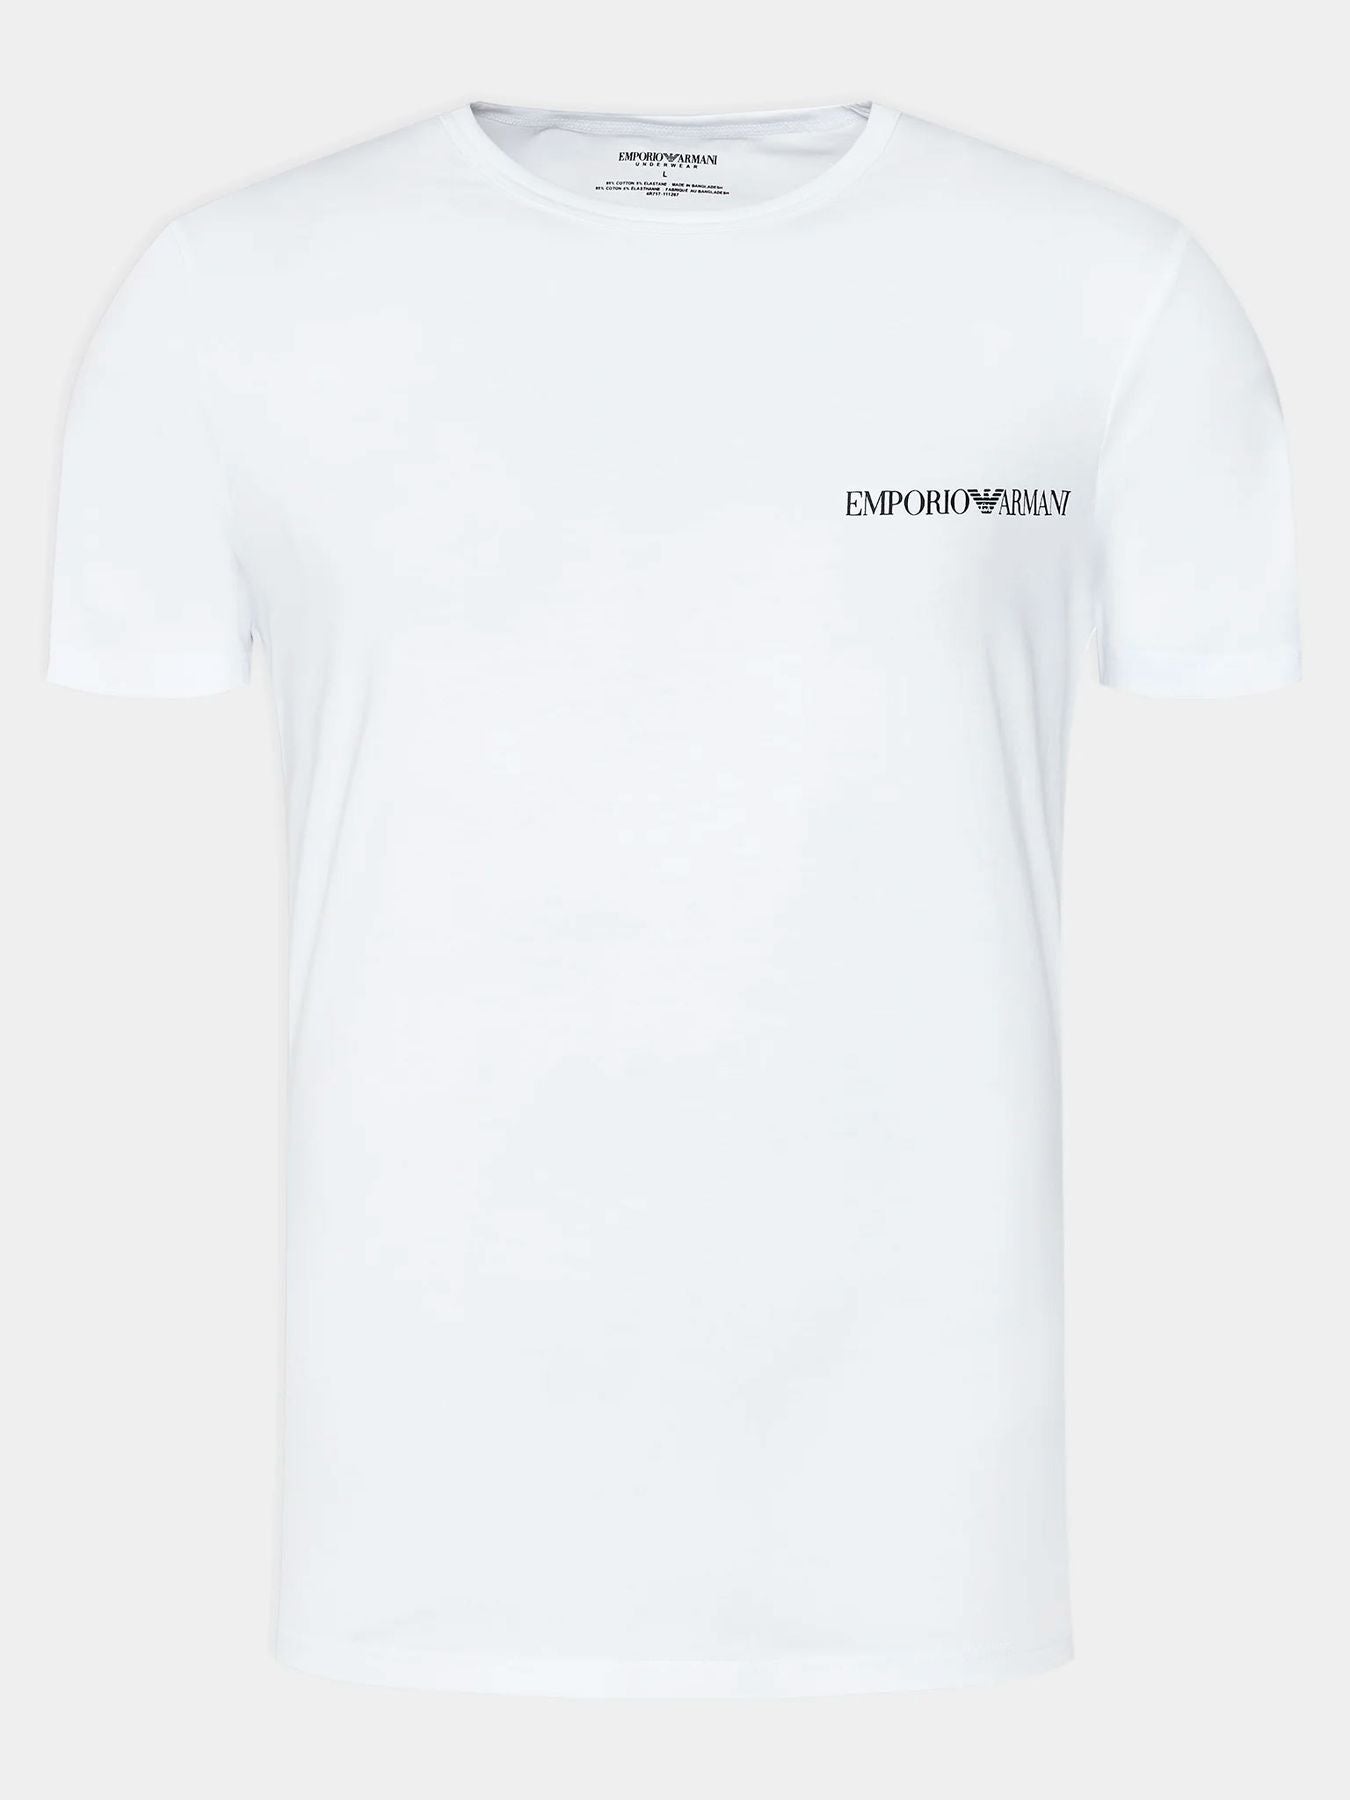 T-shirt Bi-pack Uomo 4R717 111267 Emporio Armani evabiancheria